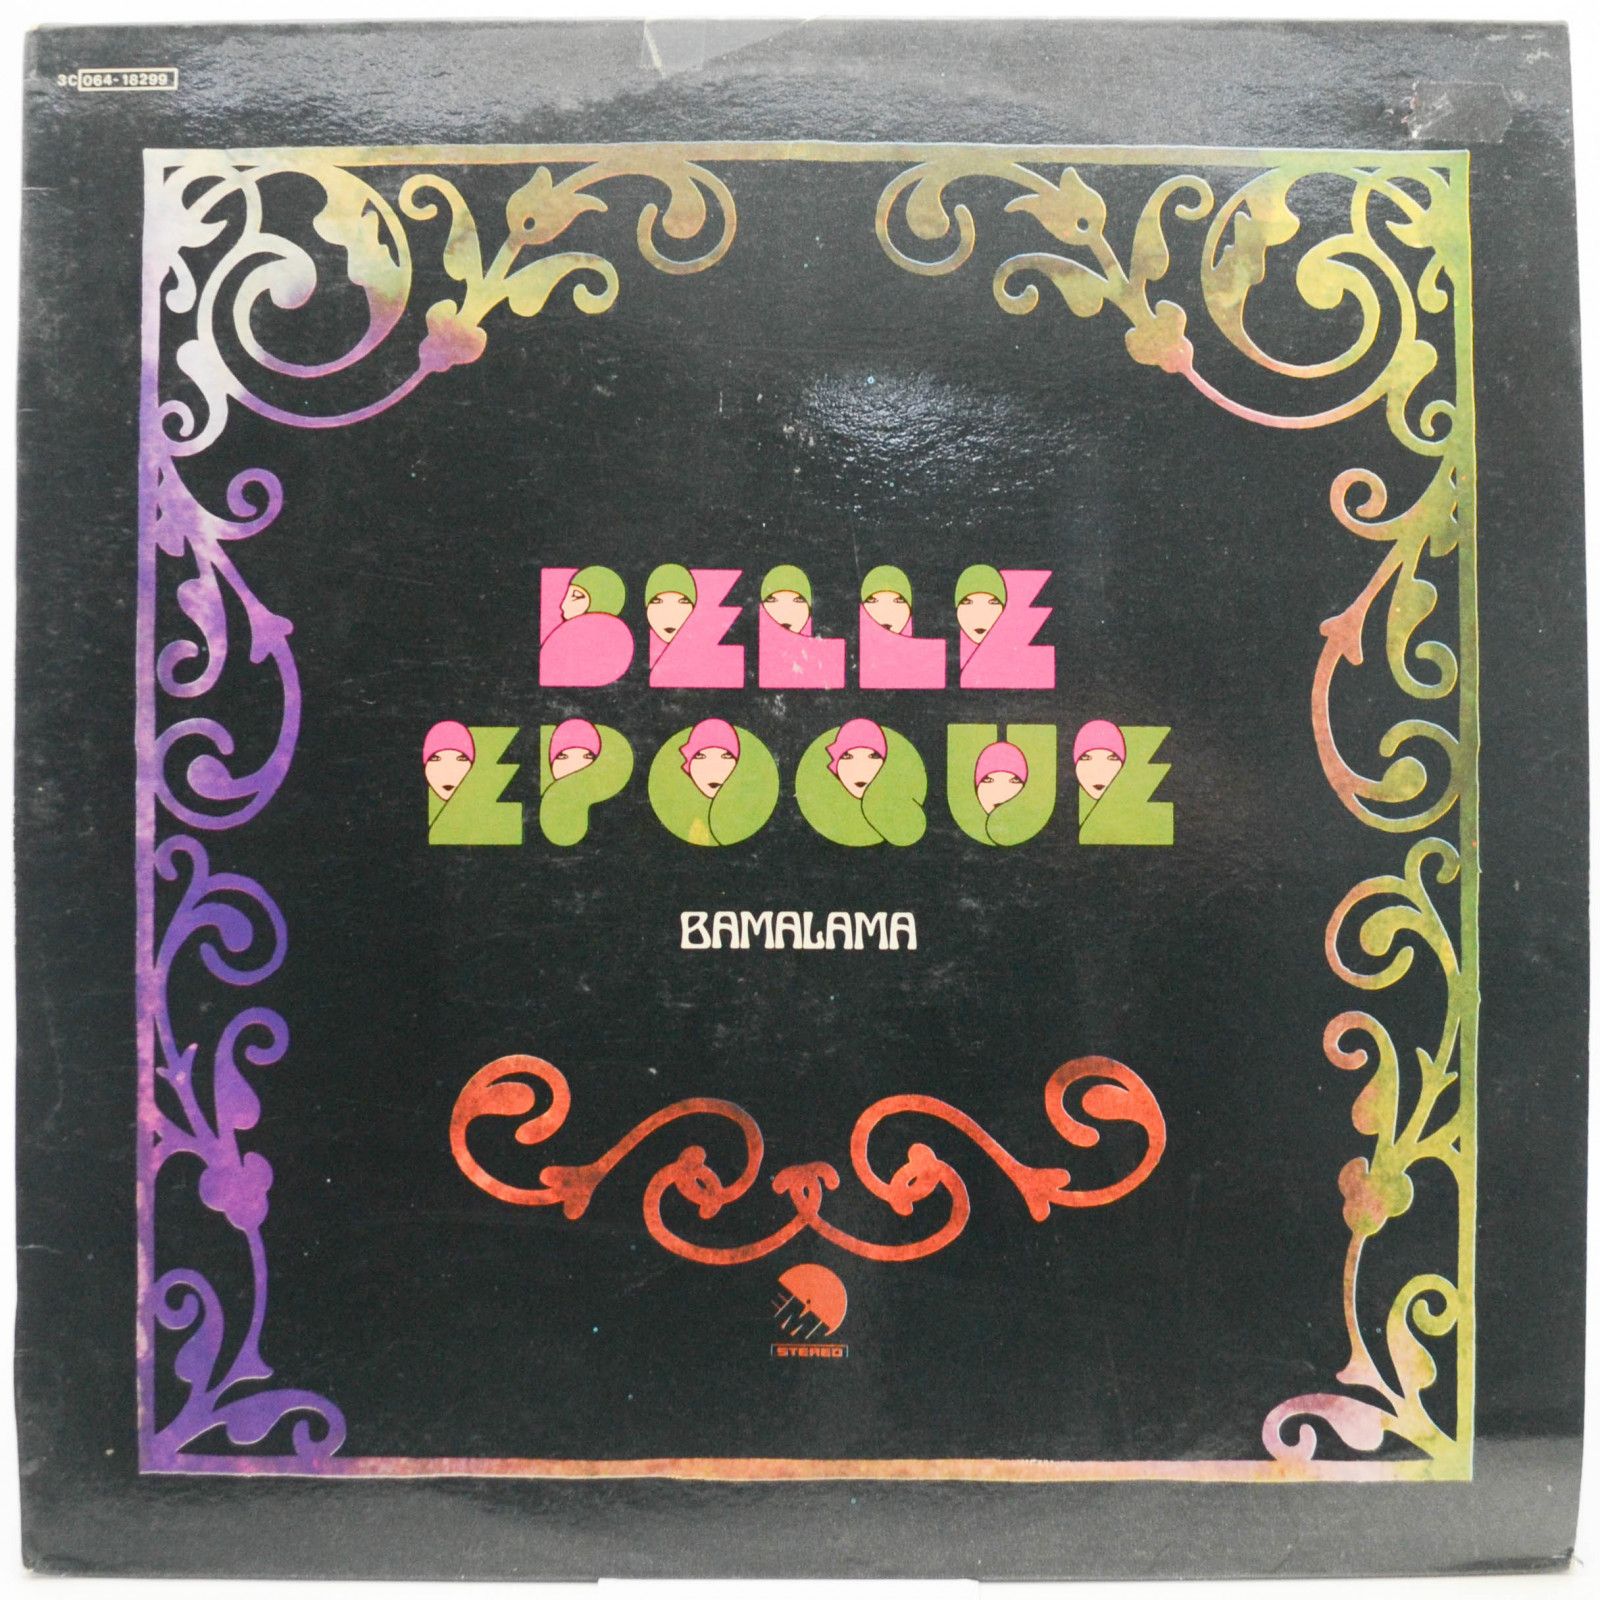 Belle Epoque — Bamalama, 1977